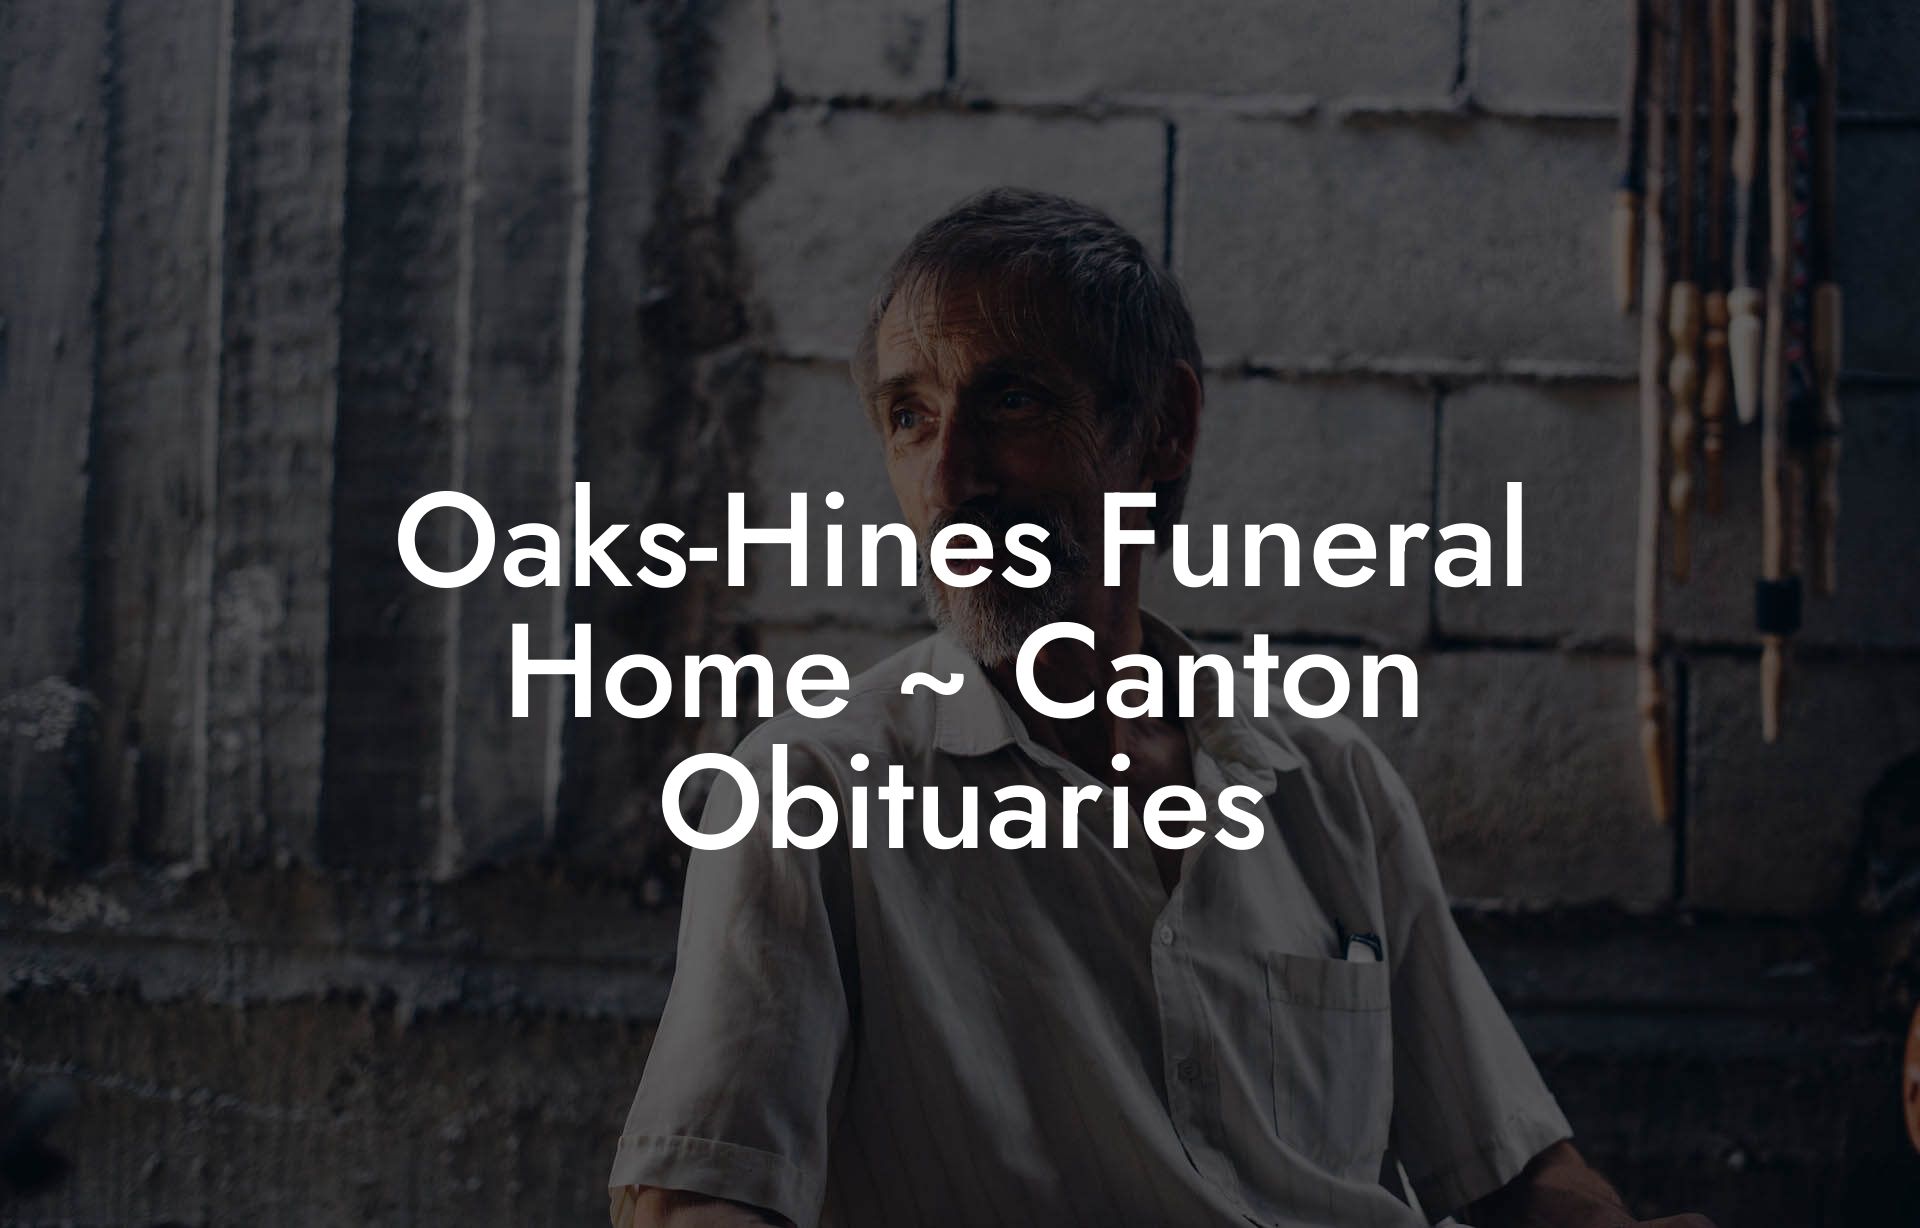 Oaks-Hines Funeral Home - Canton Obituaries